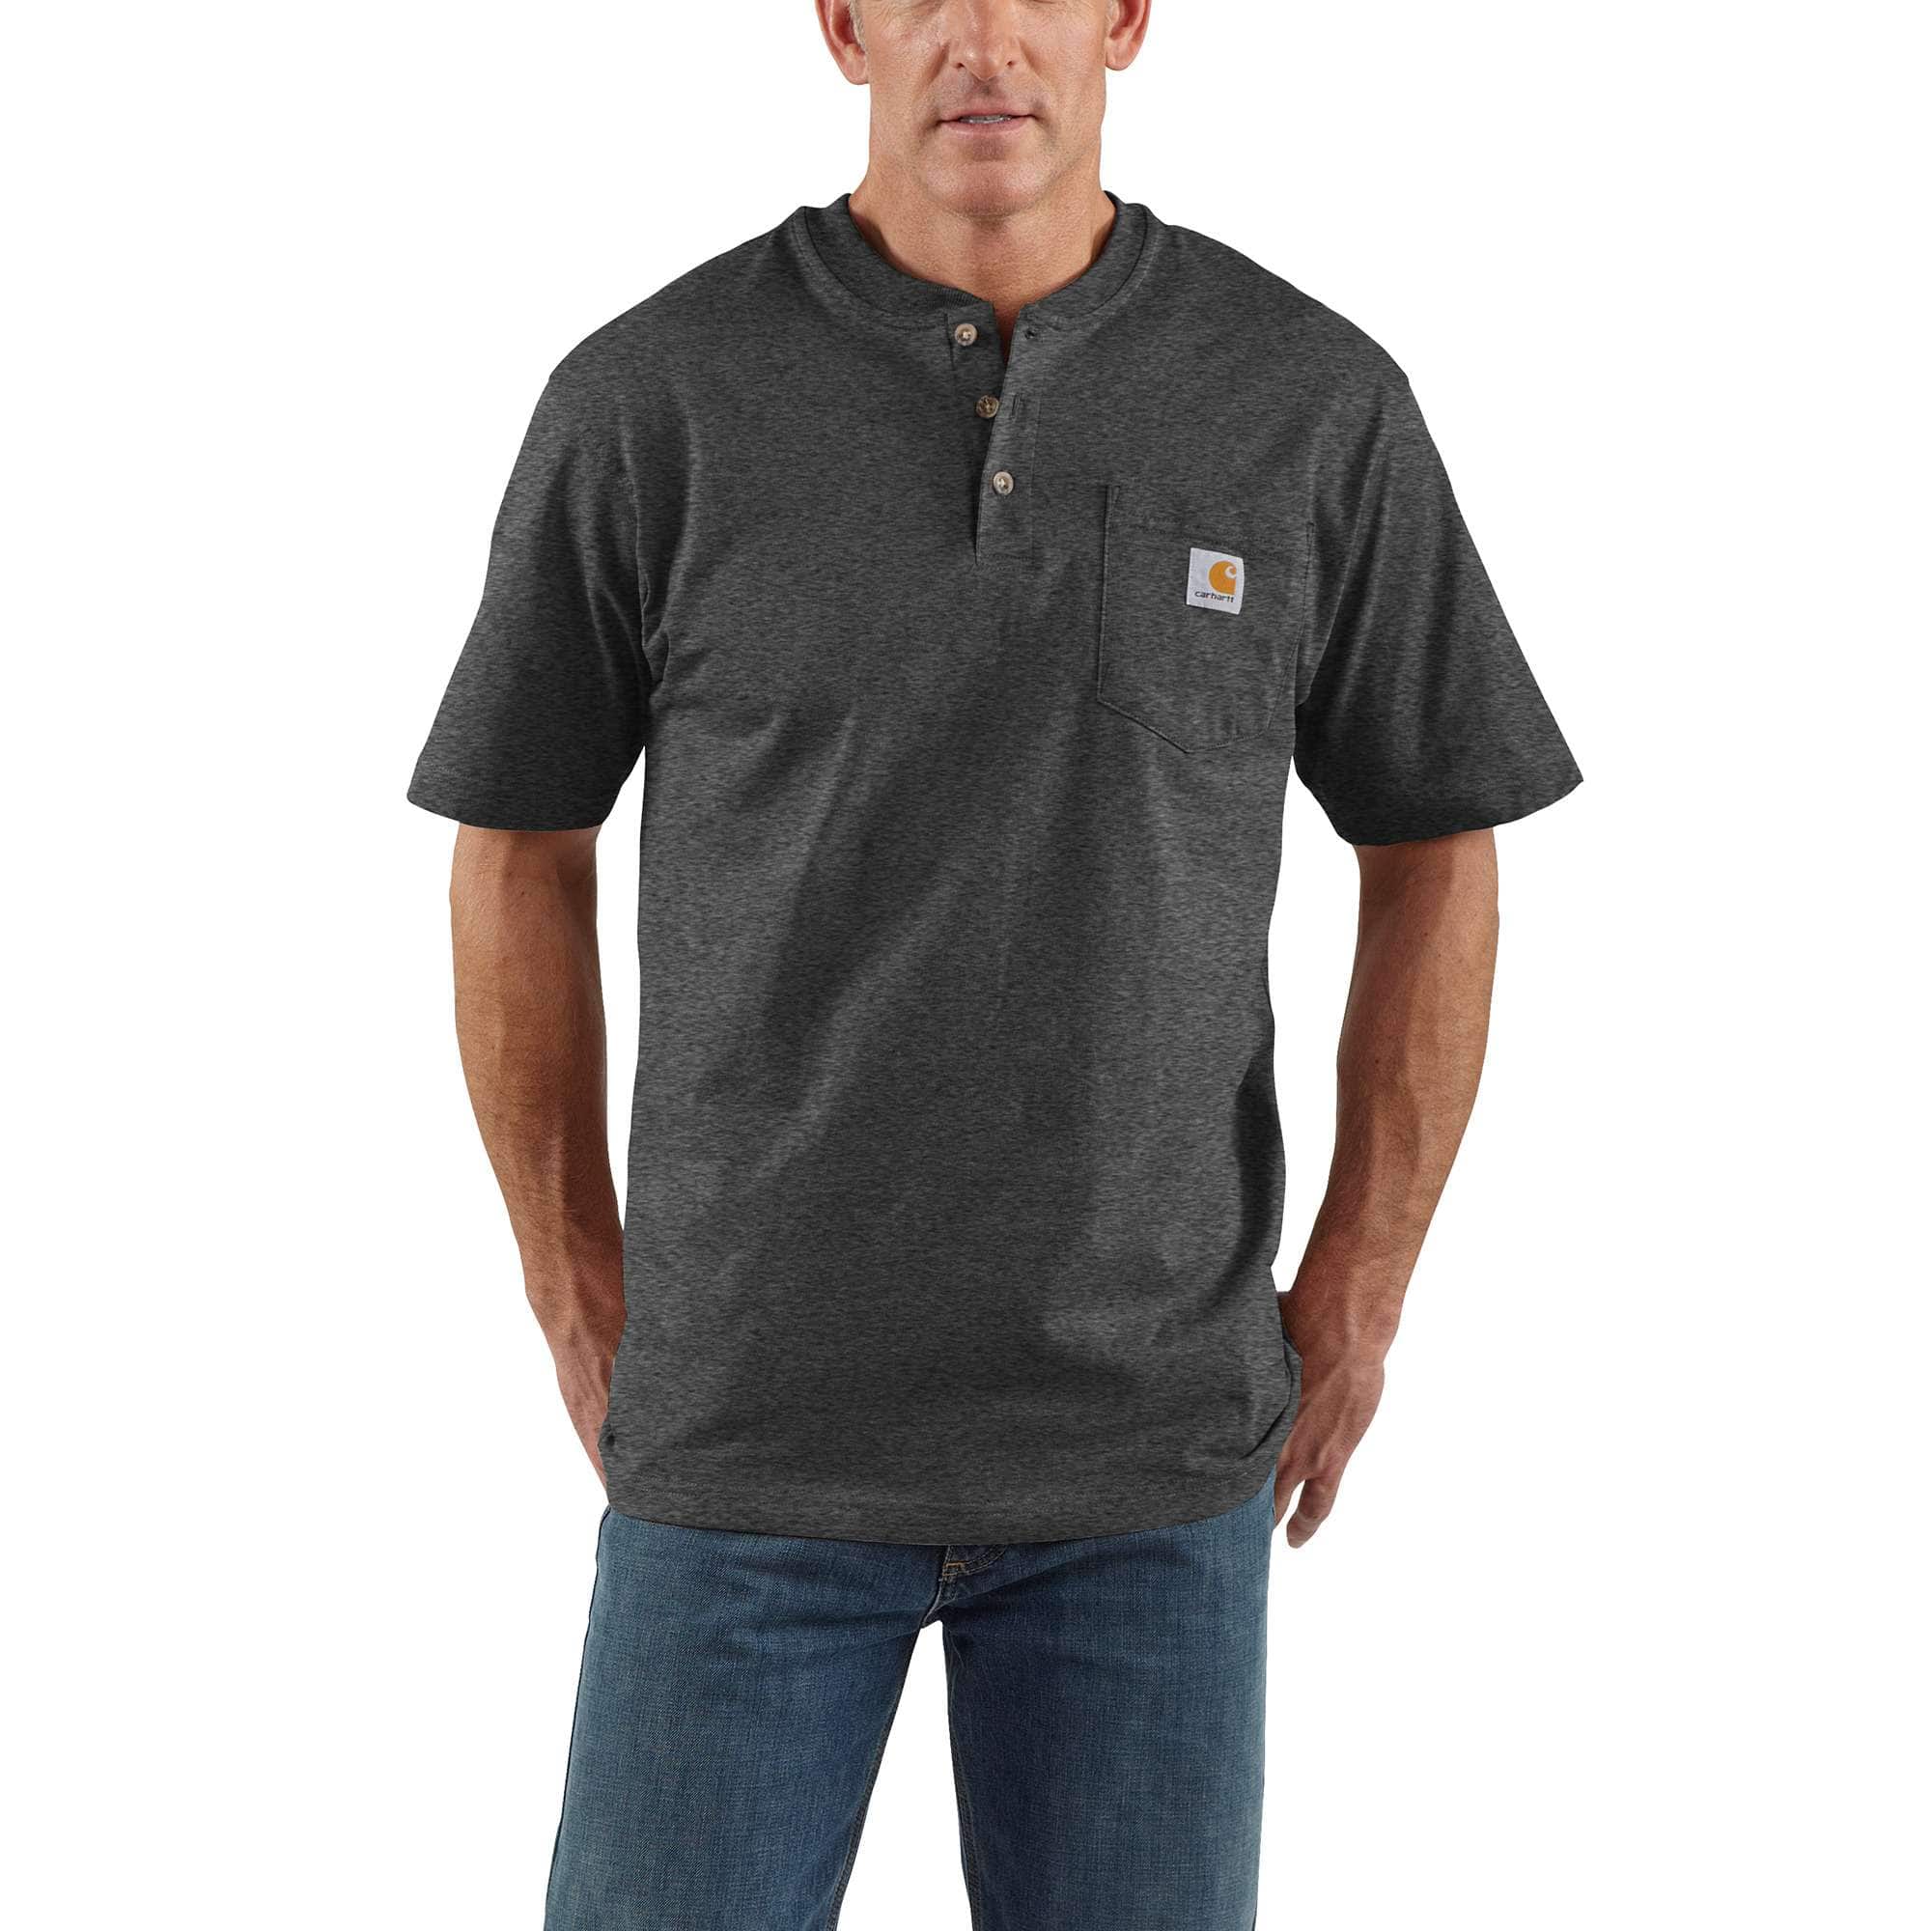 HARBETH Men/'s Casual Soft Athletic Regular Fit Short Sleeve Henley Jersey Shirt